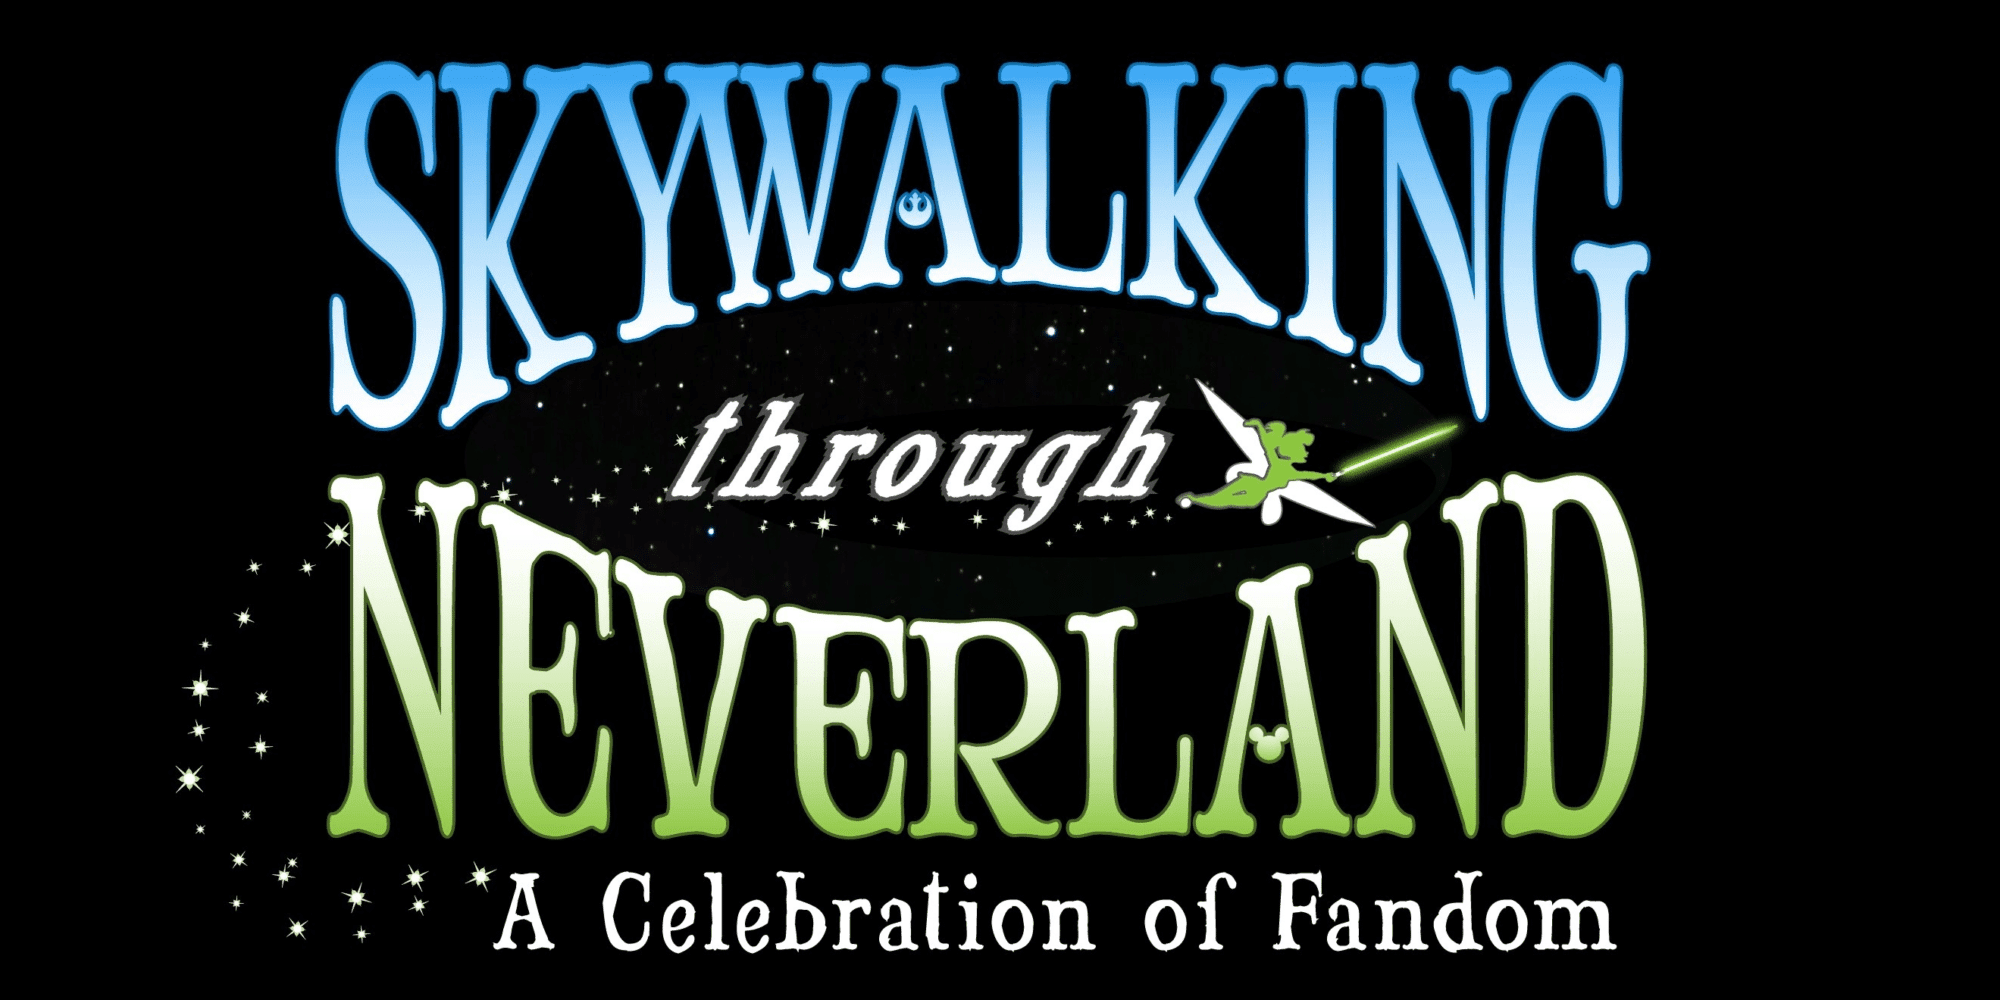 Skywalking Through Neverland